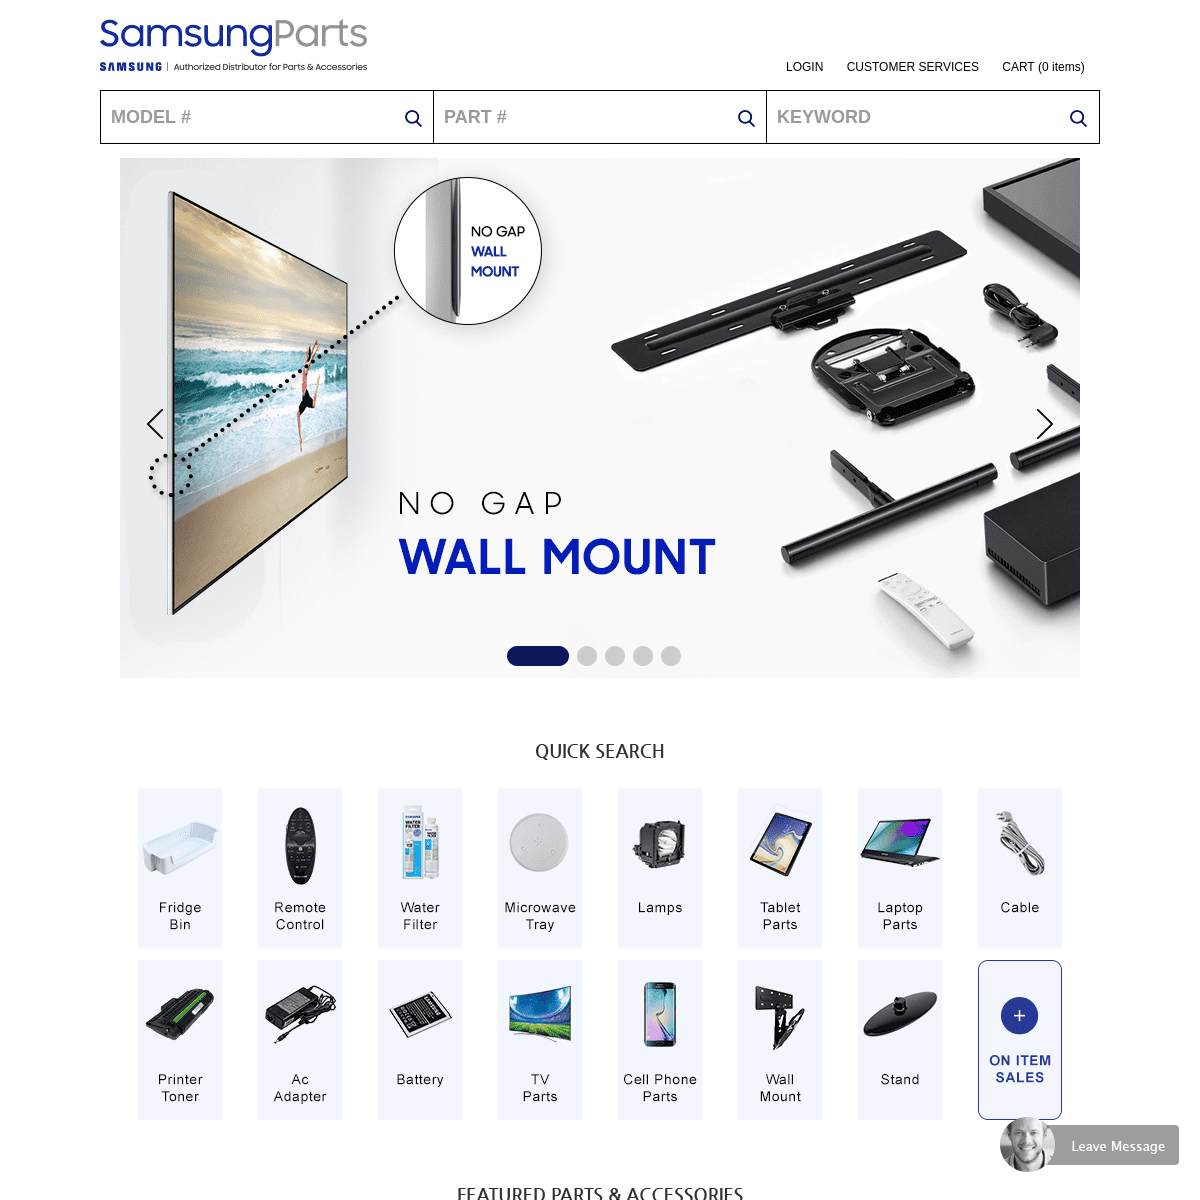 A complete backup of samsungparts.com